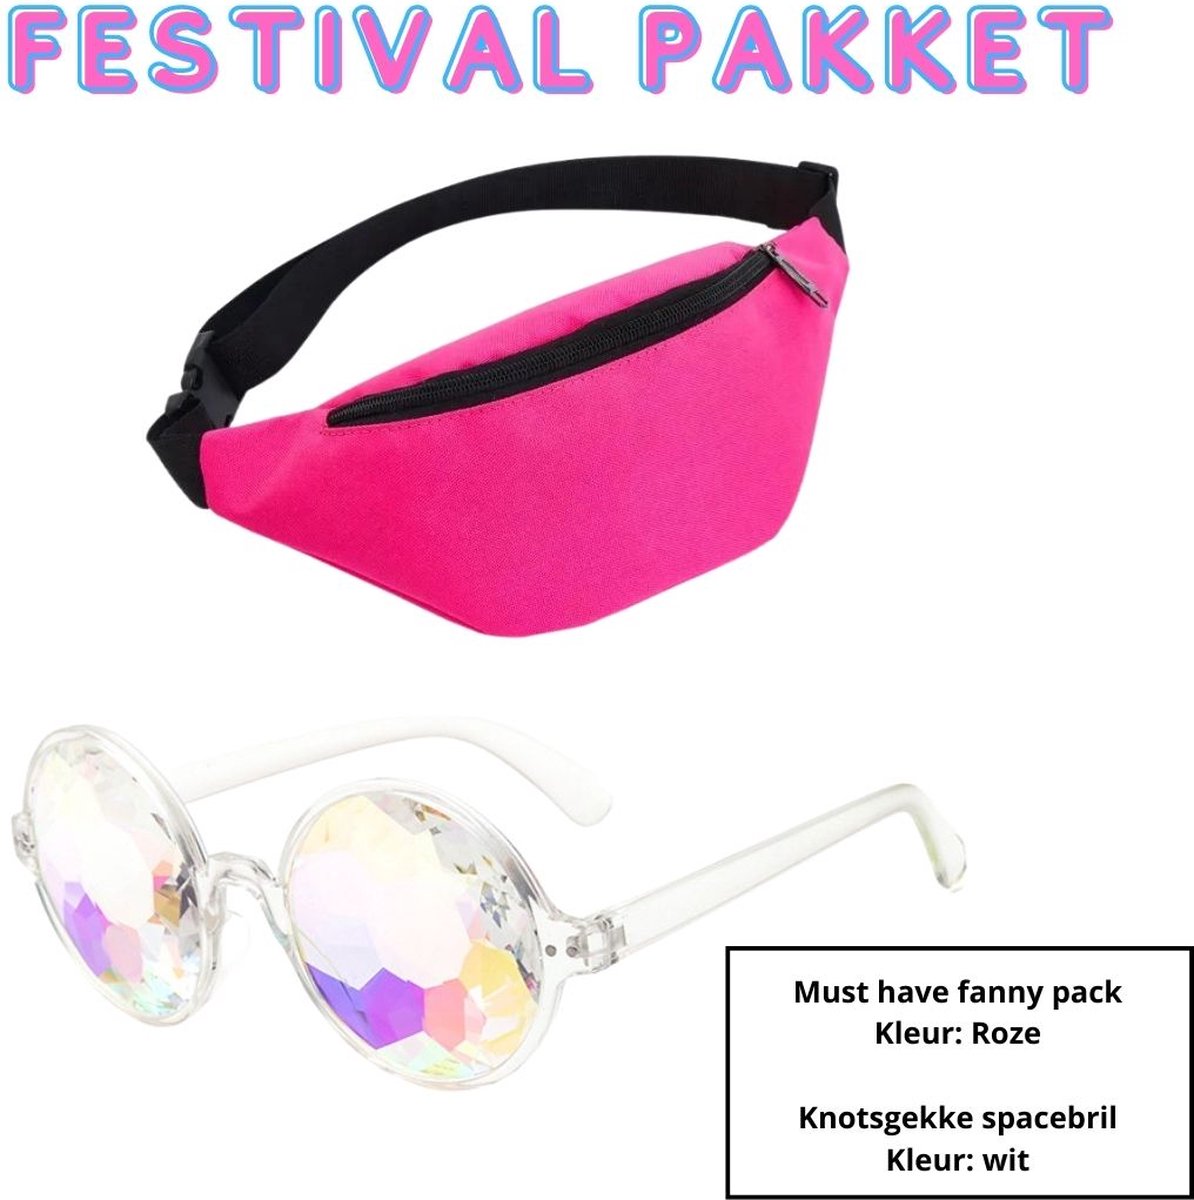 Heuptas / festival fanny pack (roze) 30x14x8 - Festival bril/spacebril (transparant)